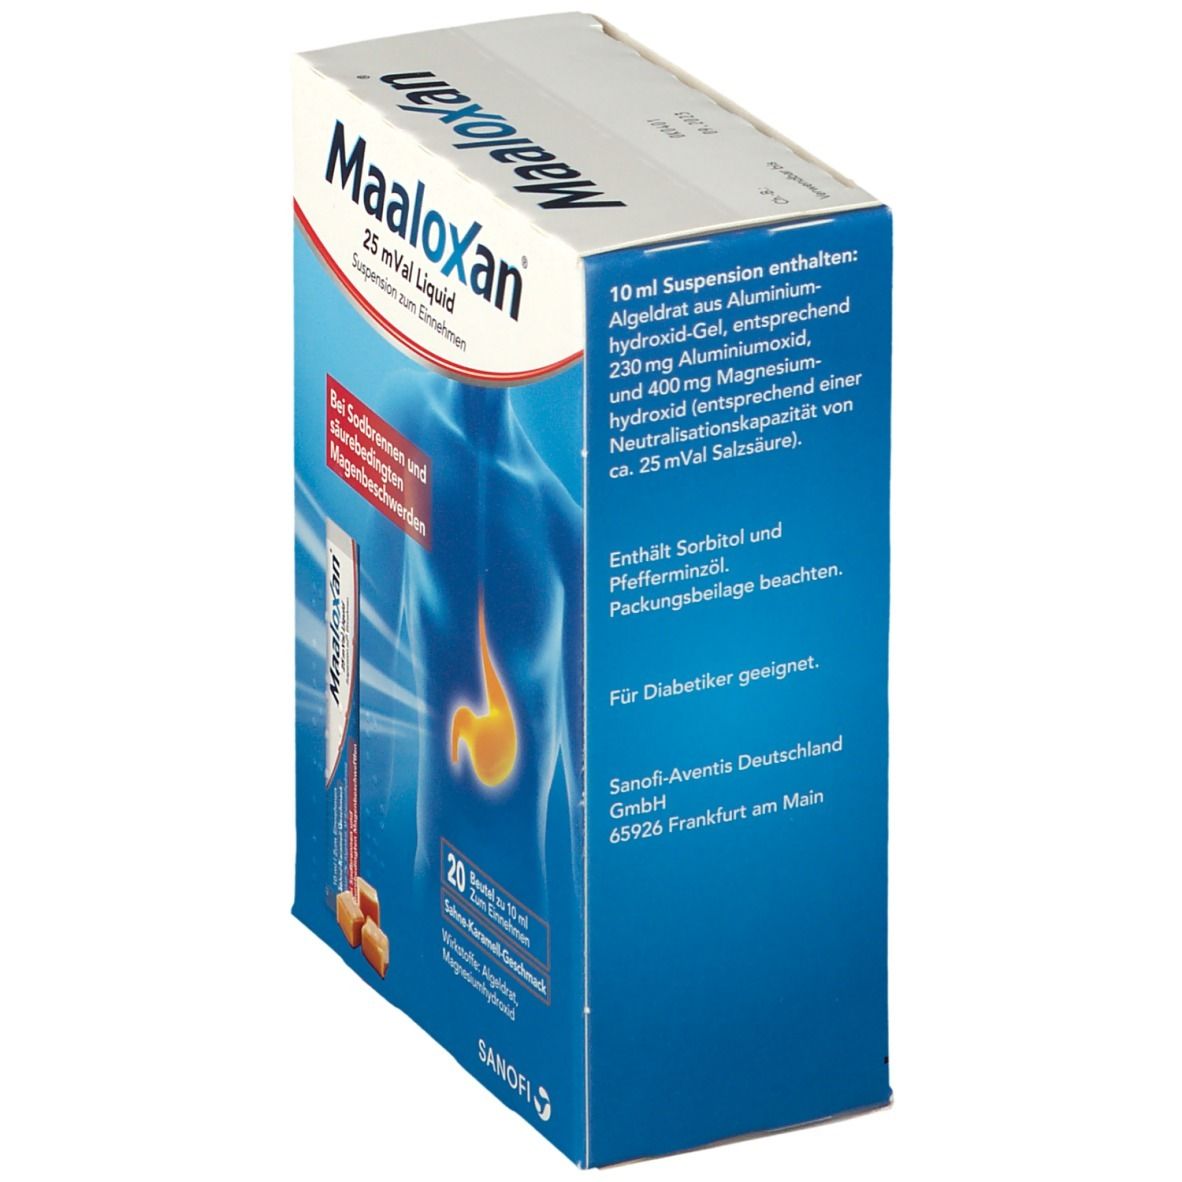 MAALOXAN®  Liquid  bei Sodbrennen mit Magenschmerzen